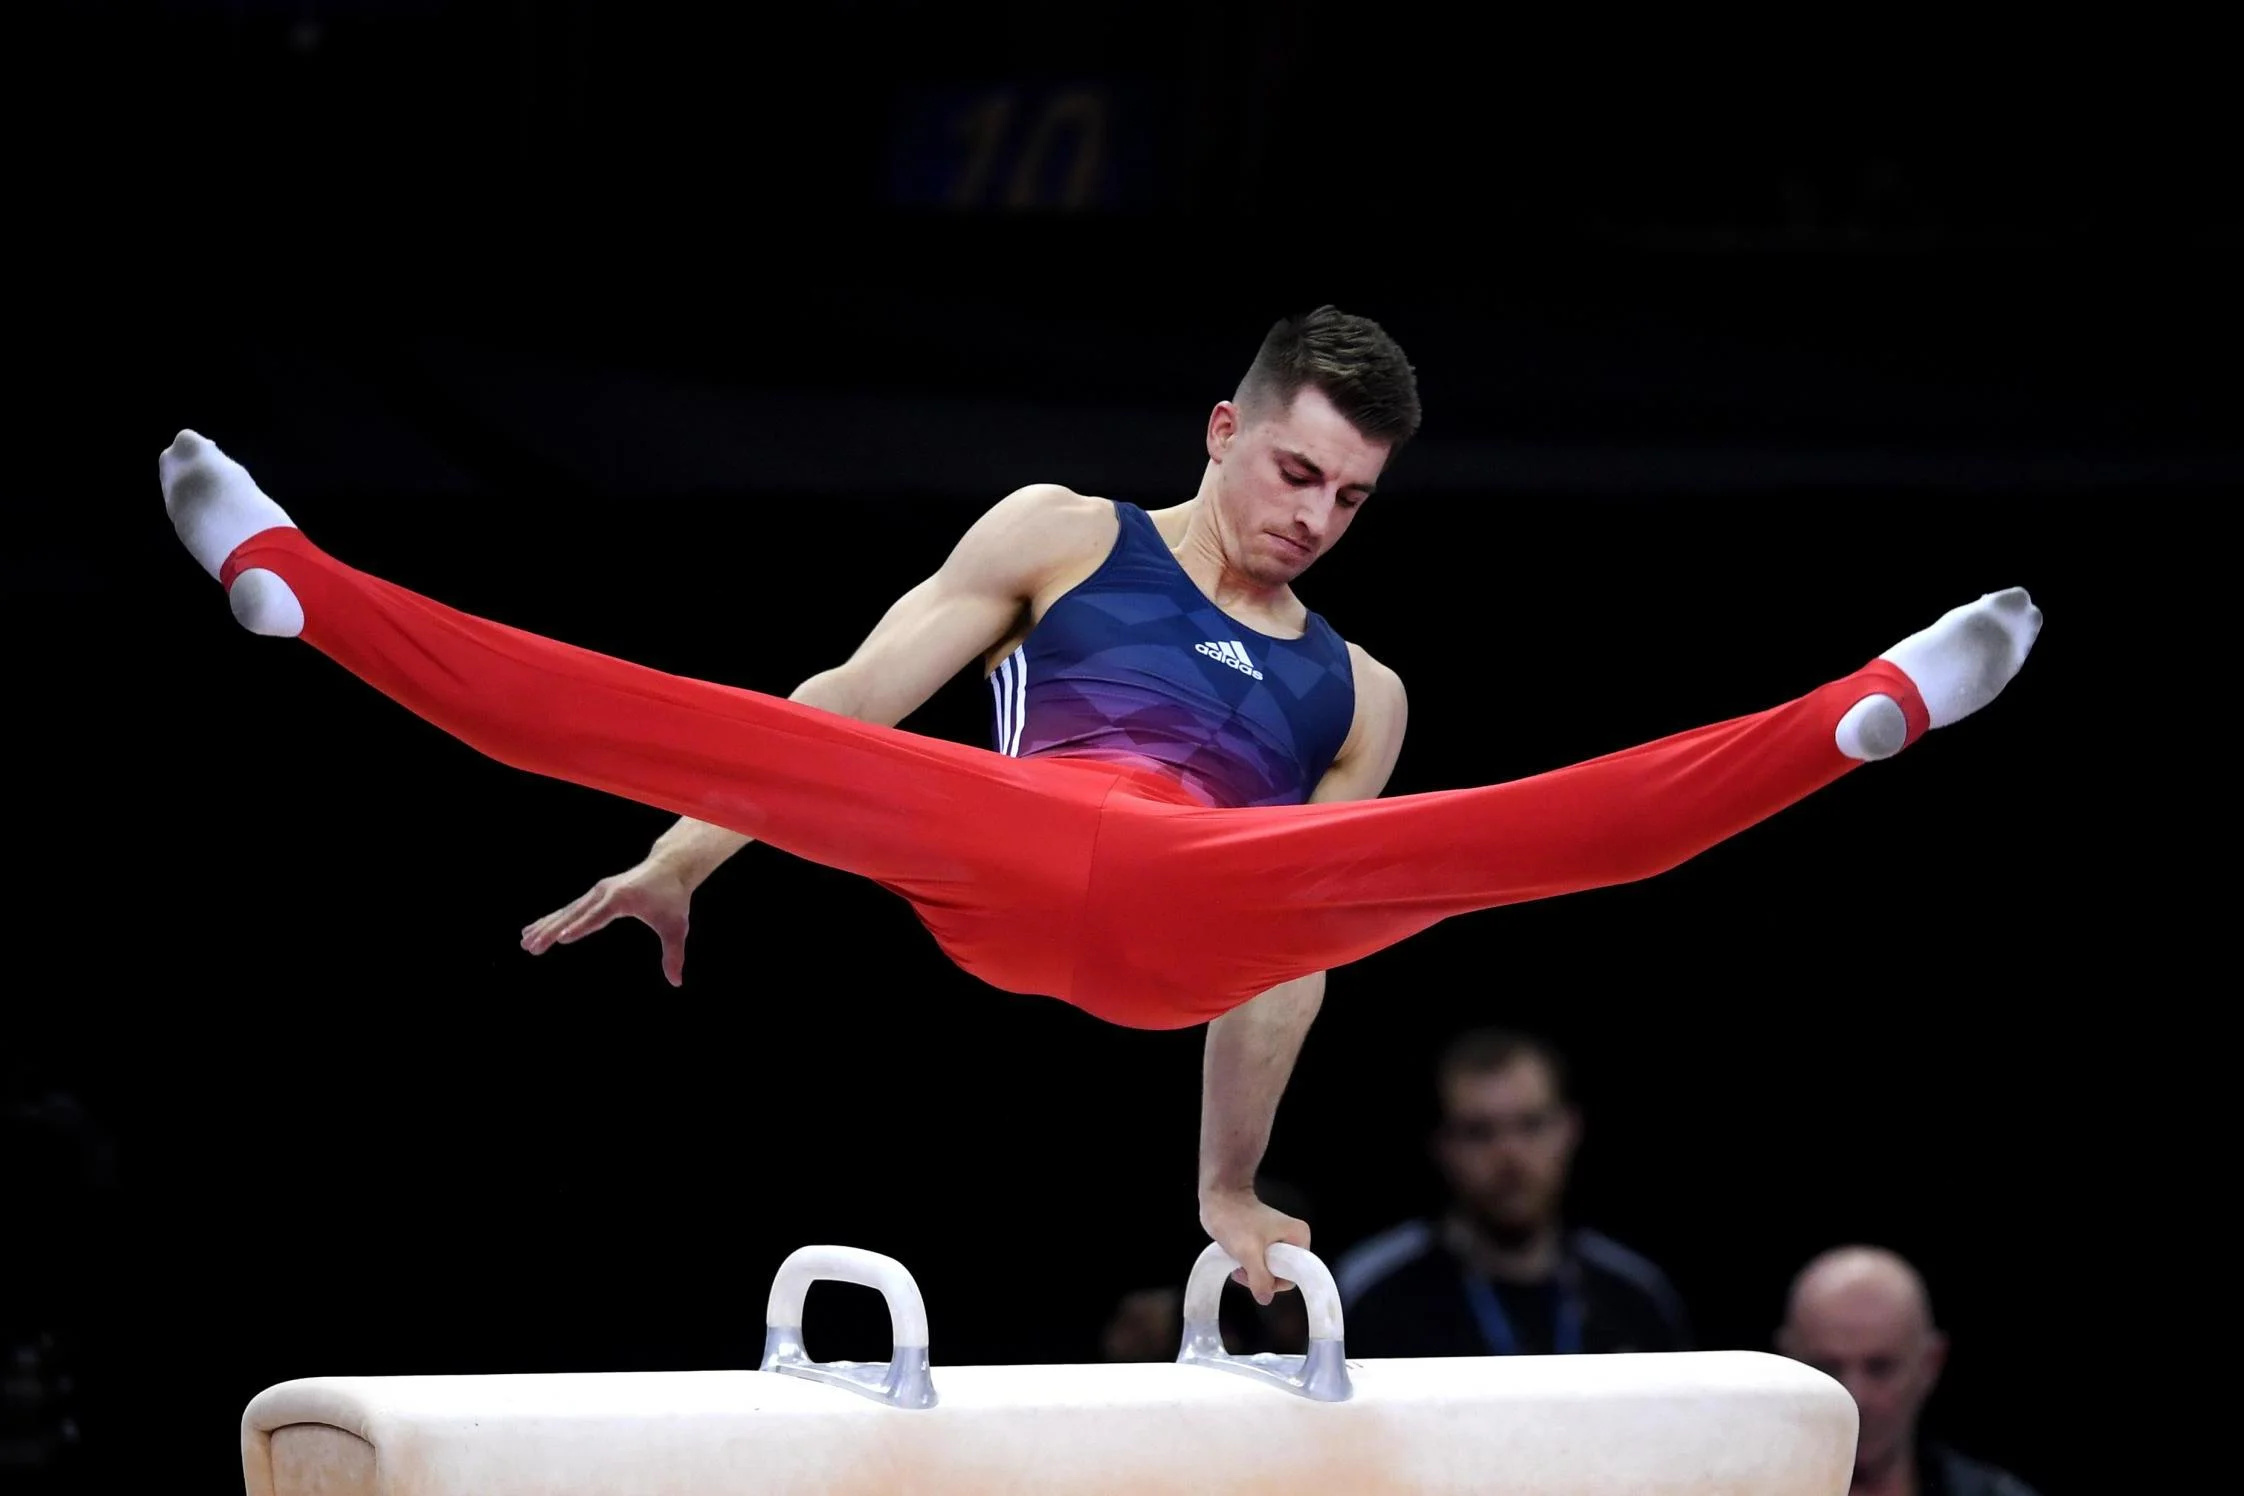 Pommel Horse (Gymnastics): Max Whitlock, 2019 European Artistic Gymnastics Championships, Szczecin, Poland. 2250x1500 HD Wallpaper.